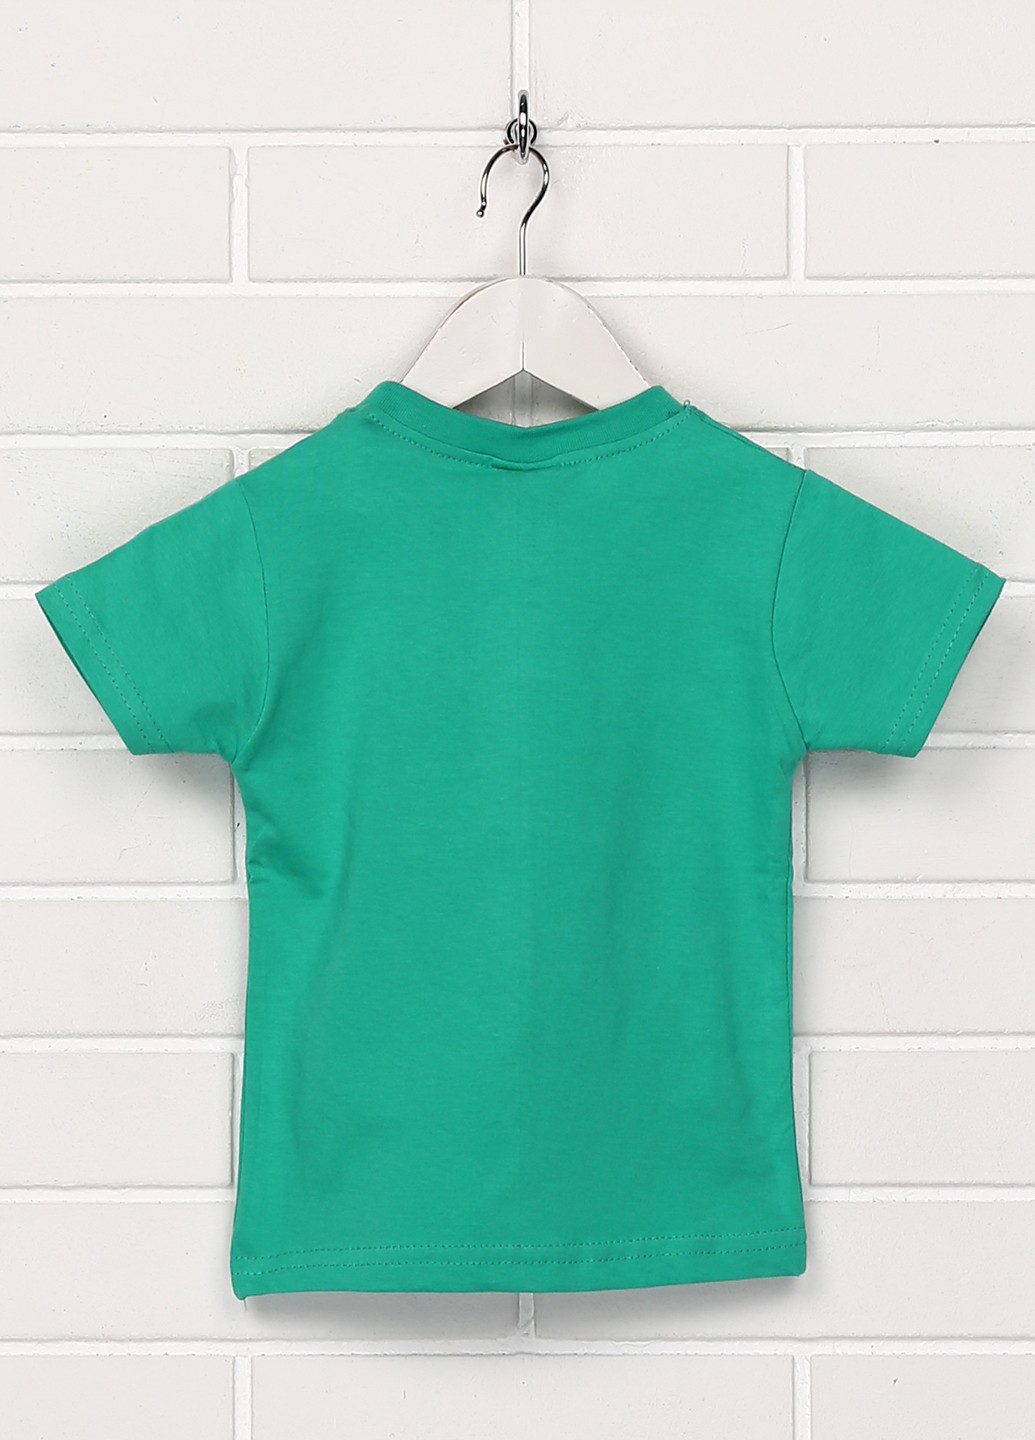 Зеленая летняя футболка с коротким рукавом Kbt